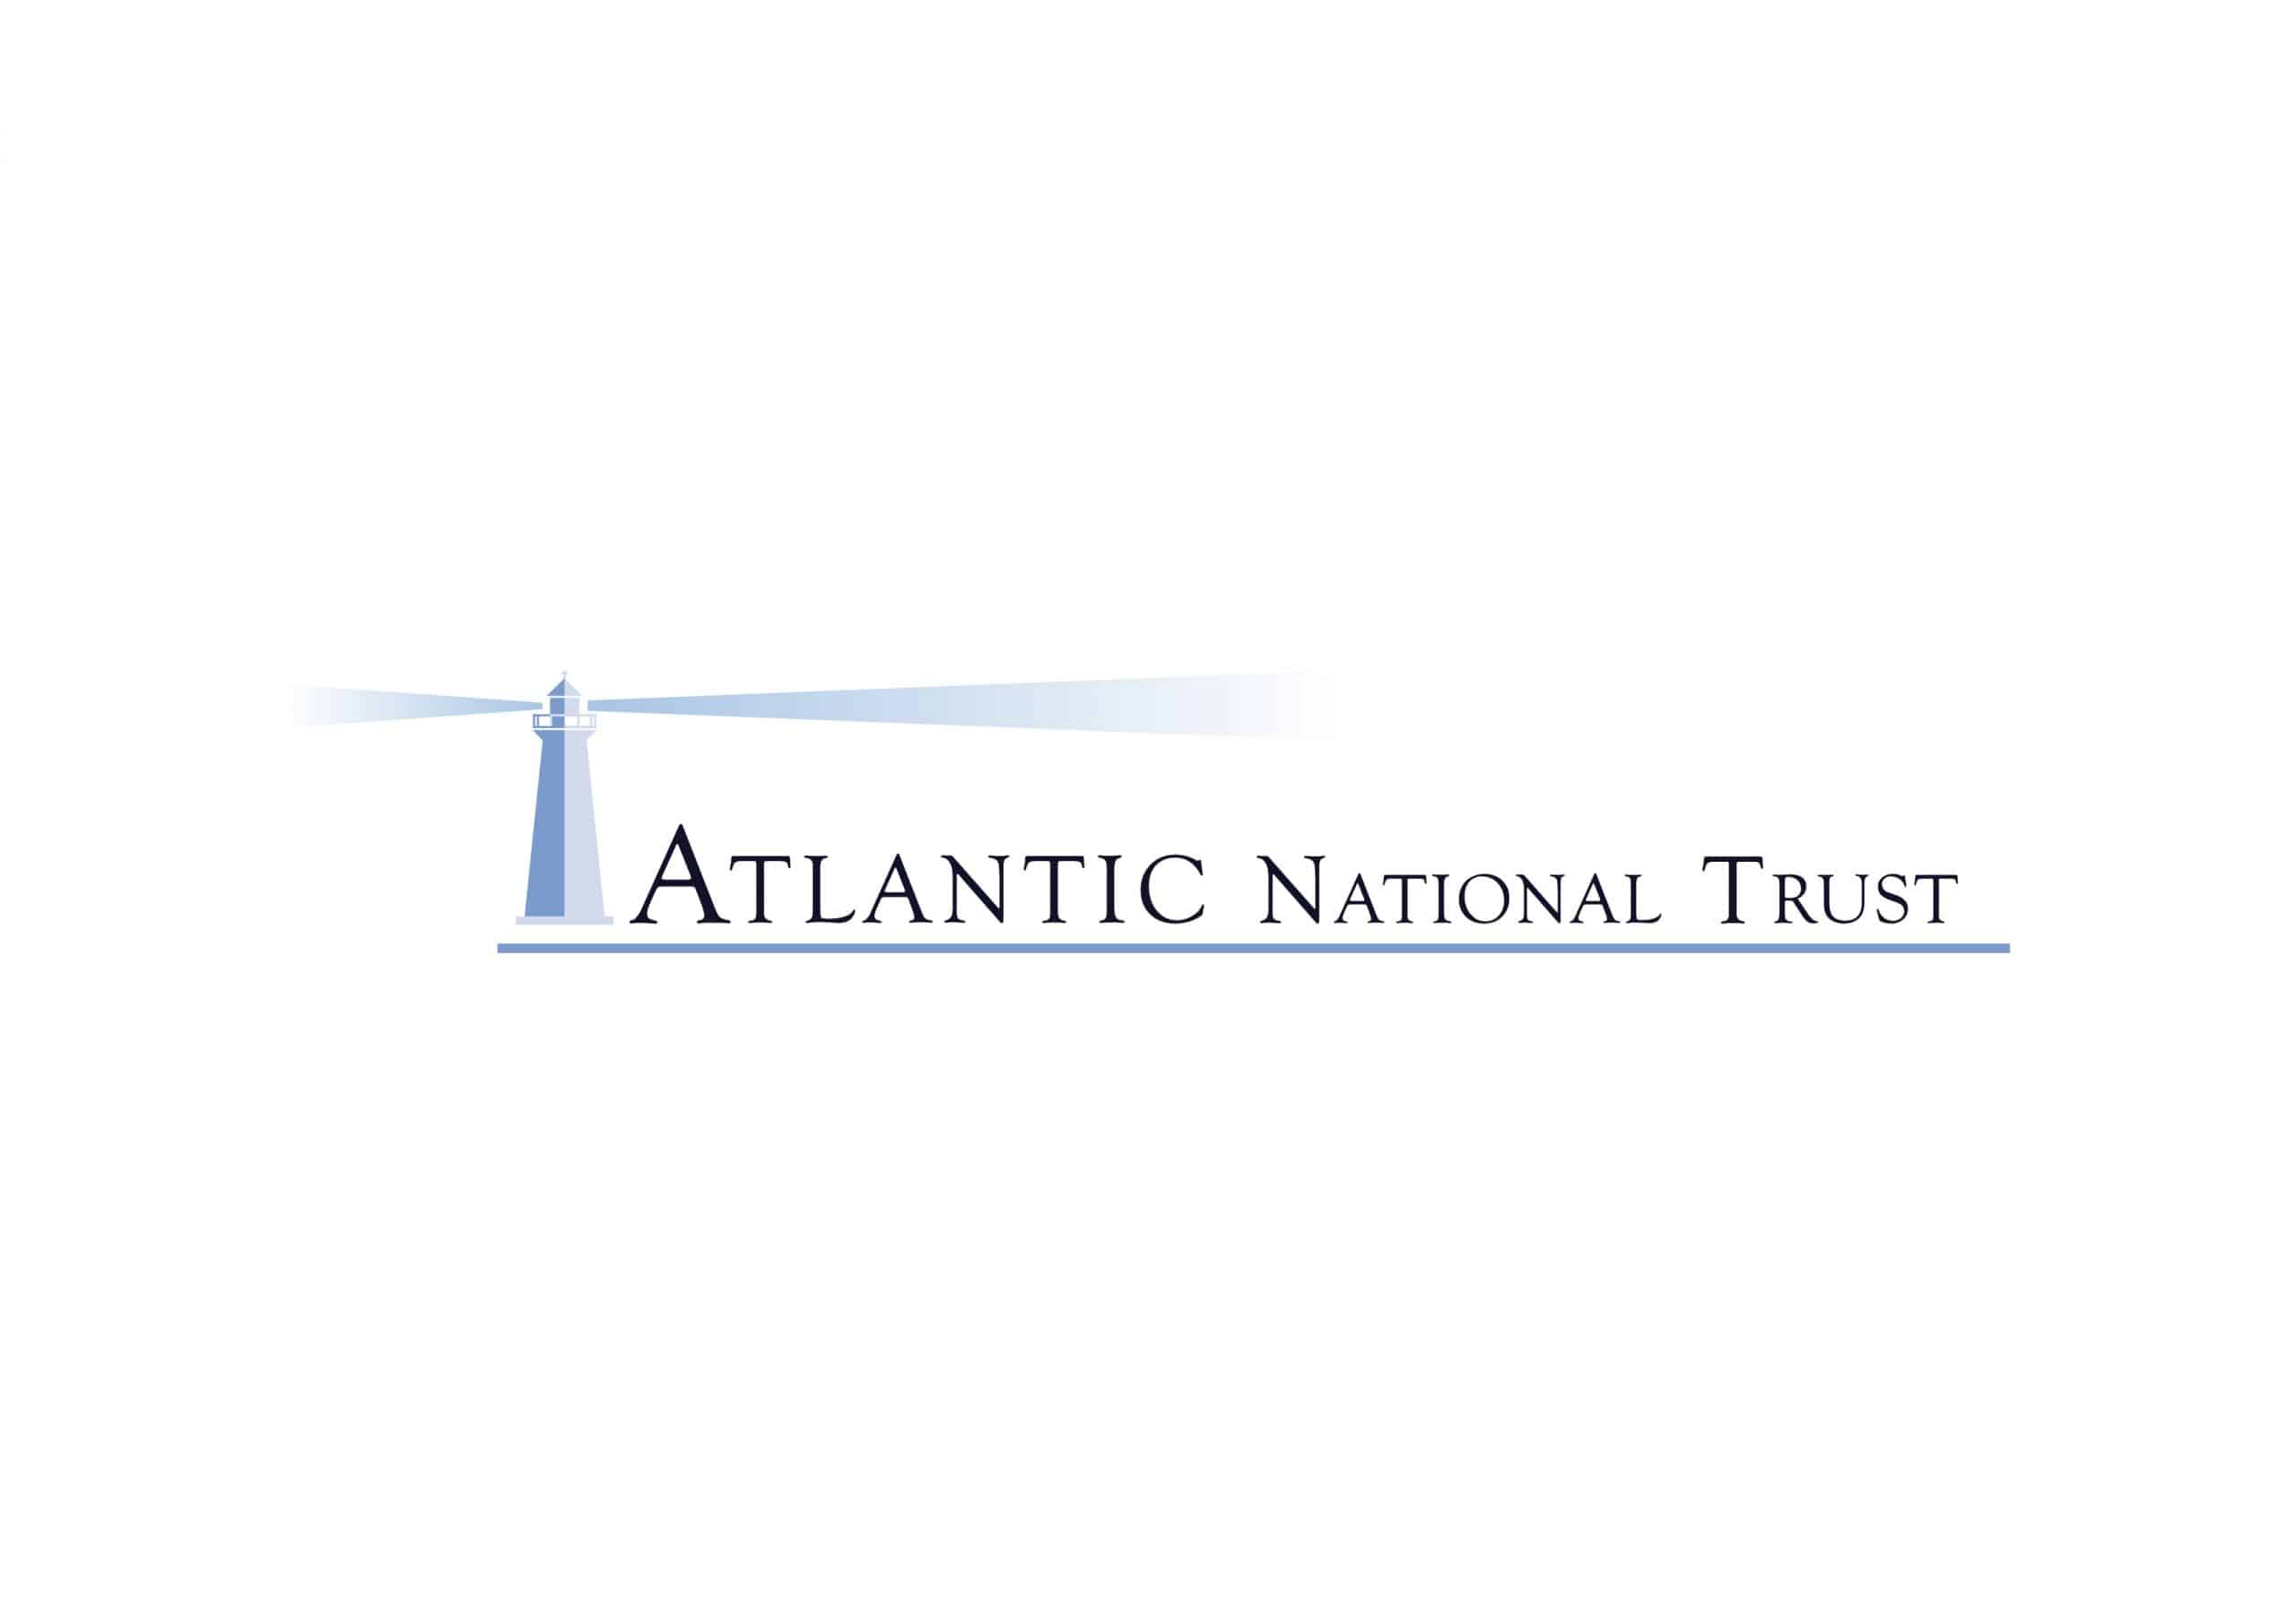 Atlantic National Trust